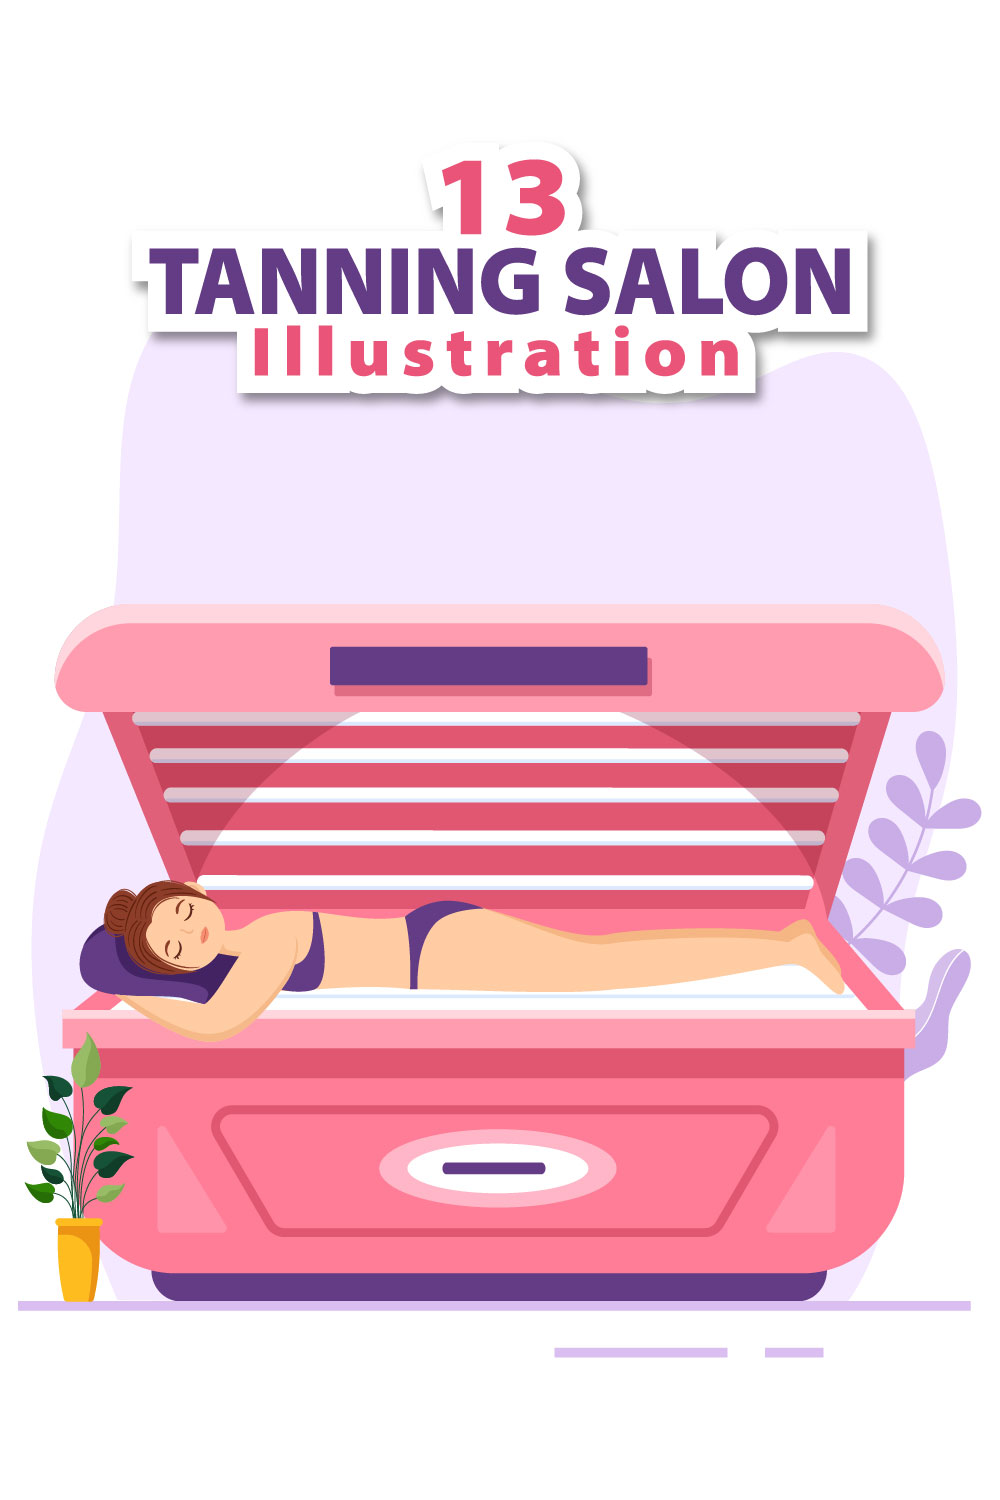 Tanning Salon Procedure Illustration pinterest image.